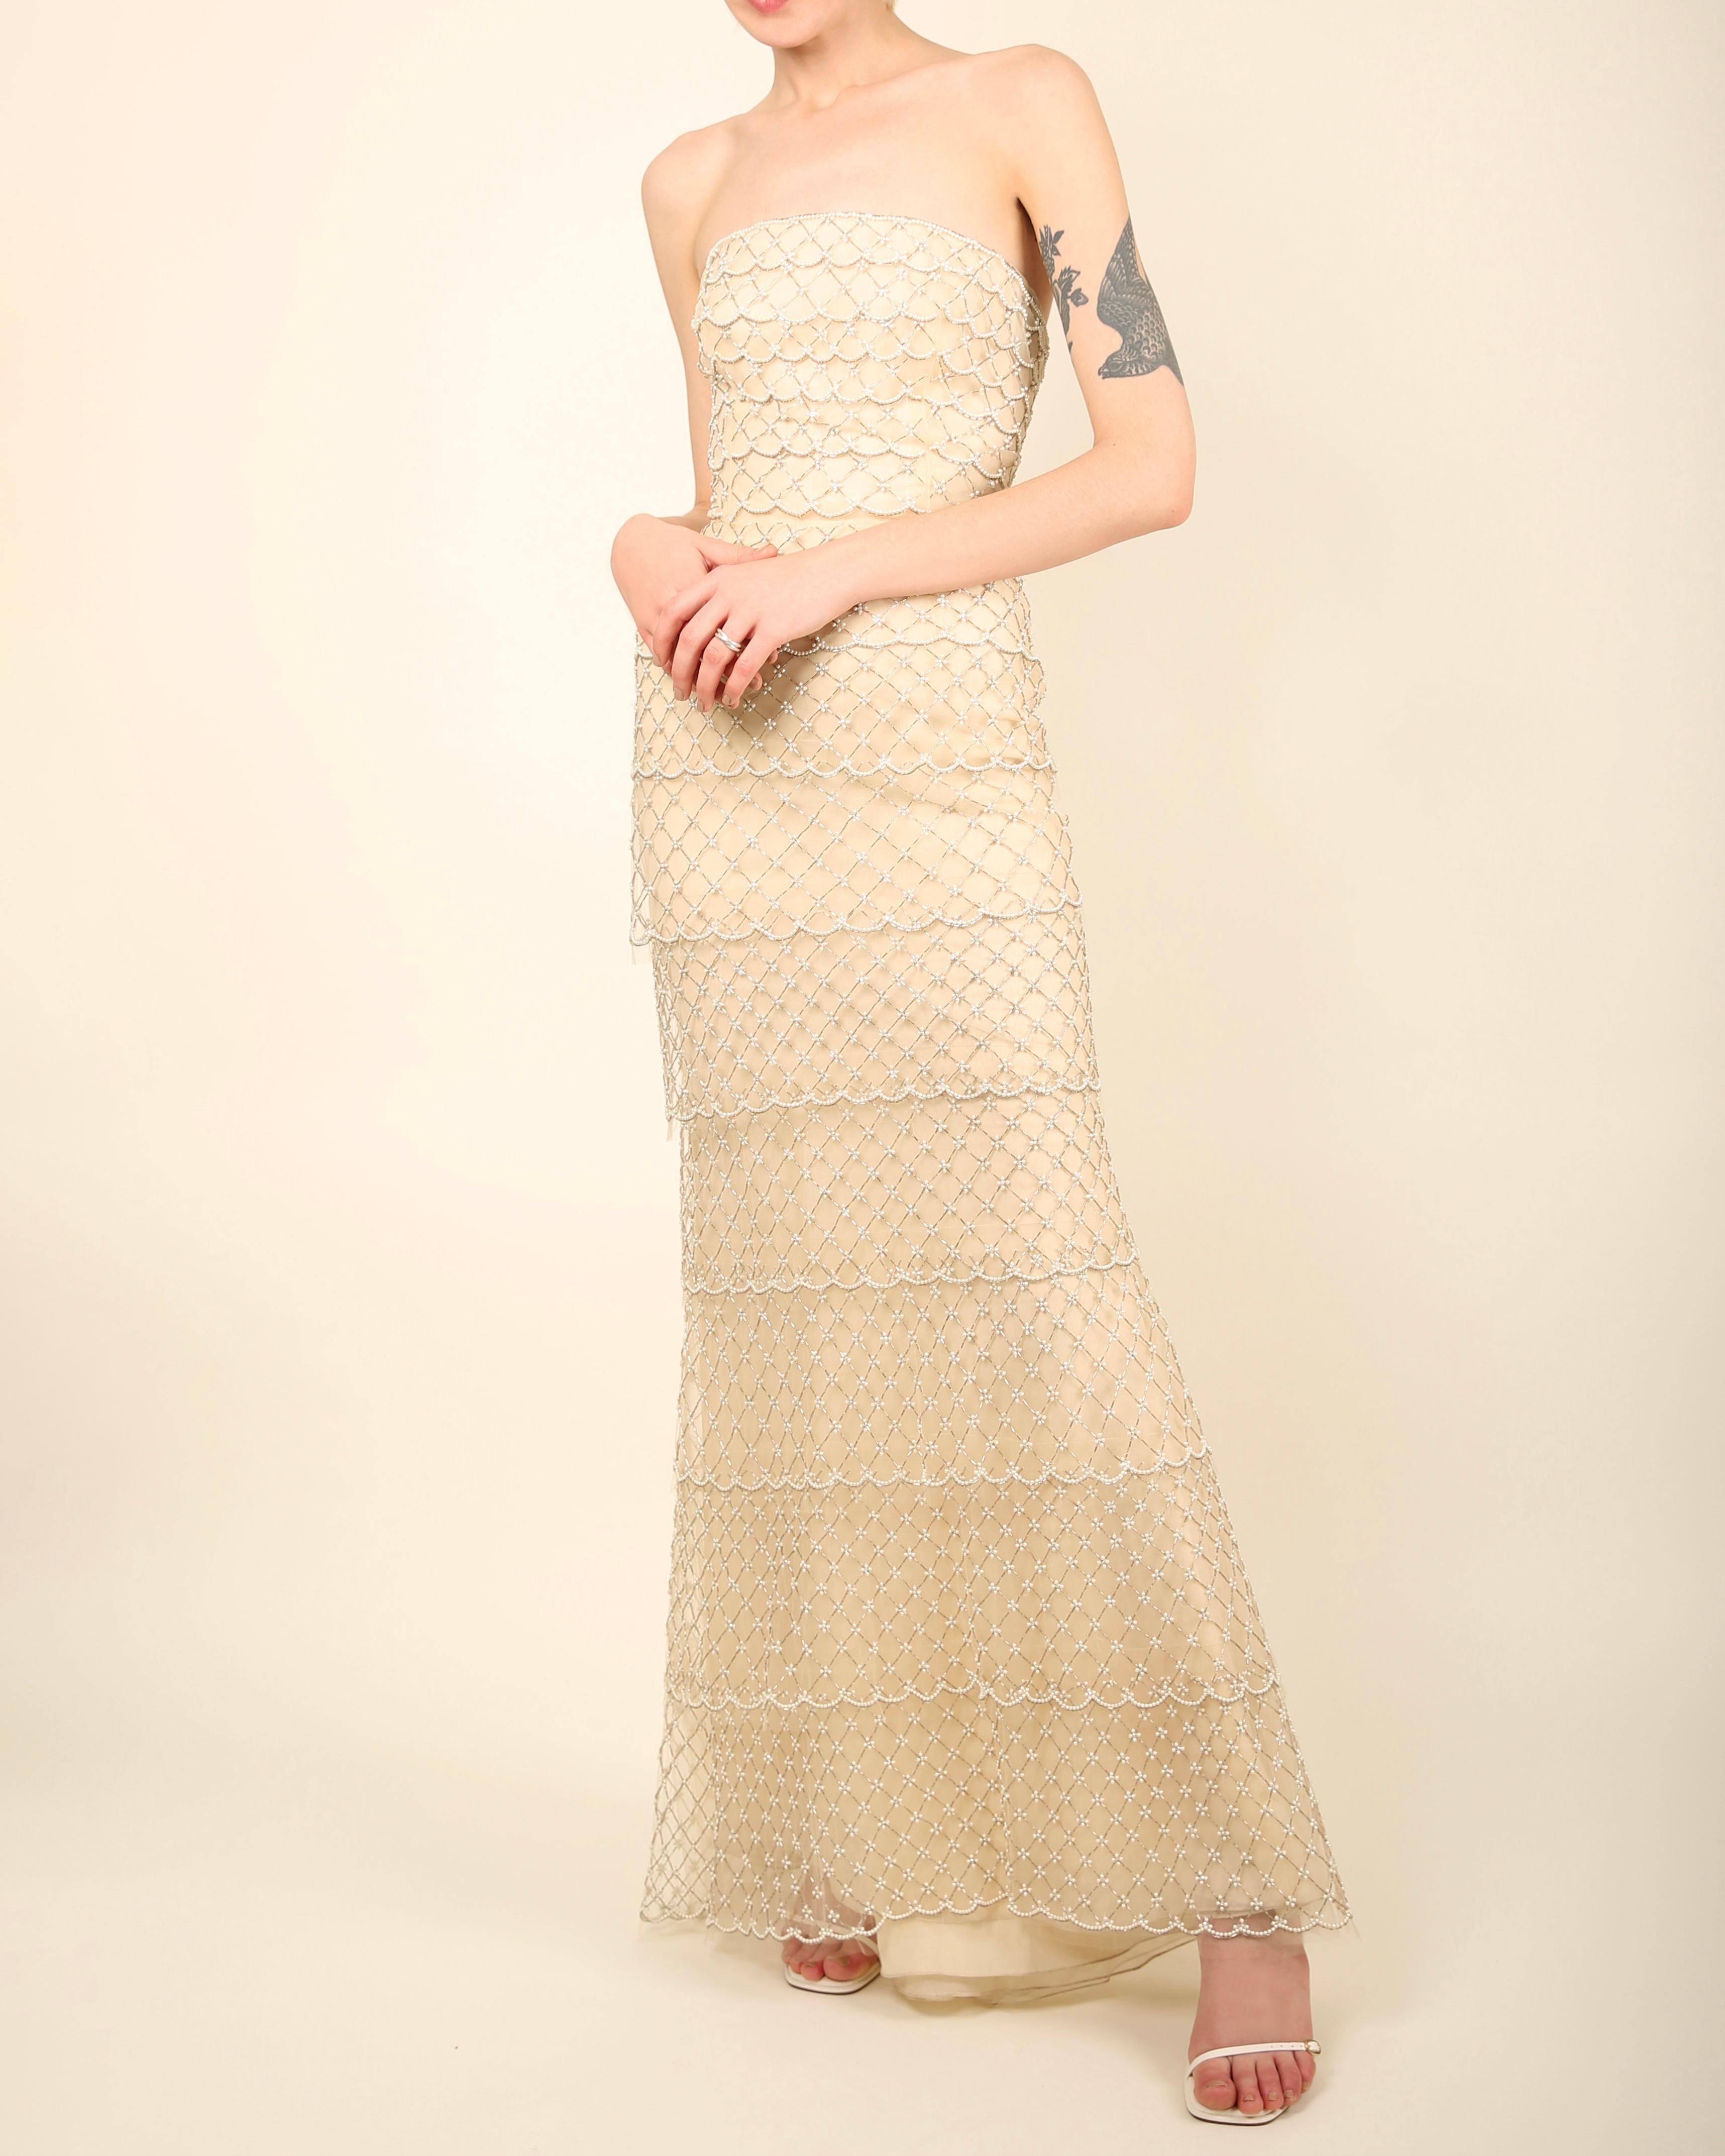 Oscar de la Renta S/S 2014 strapless tiered sheer mesh pearl wedding dress gown For Sale 5